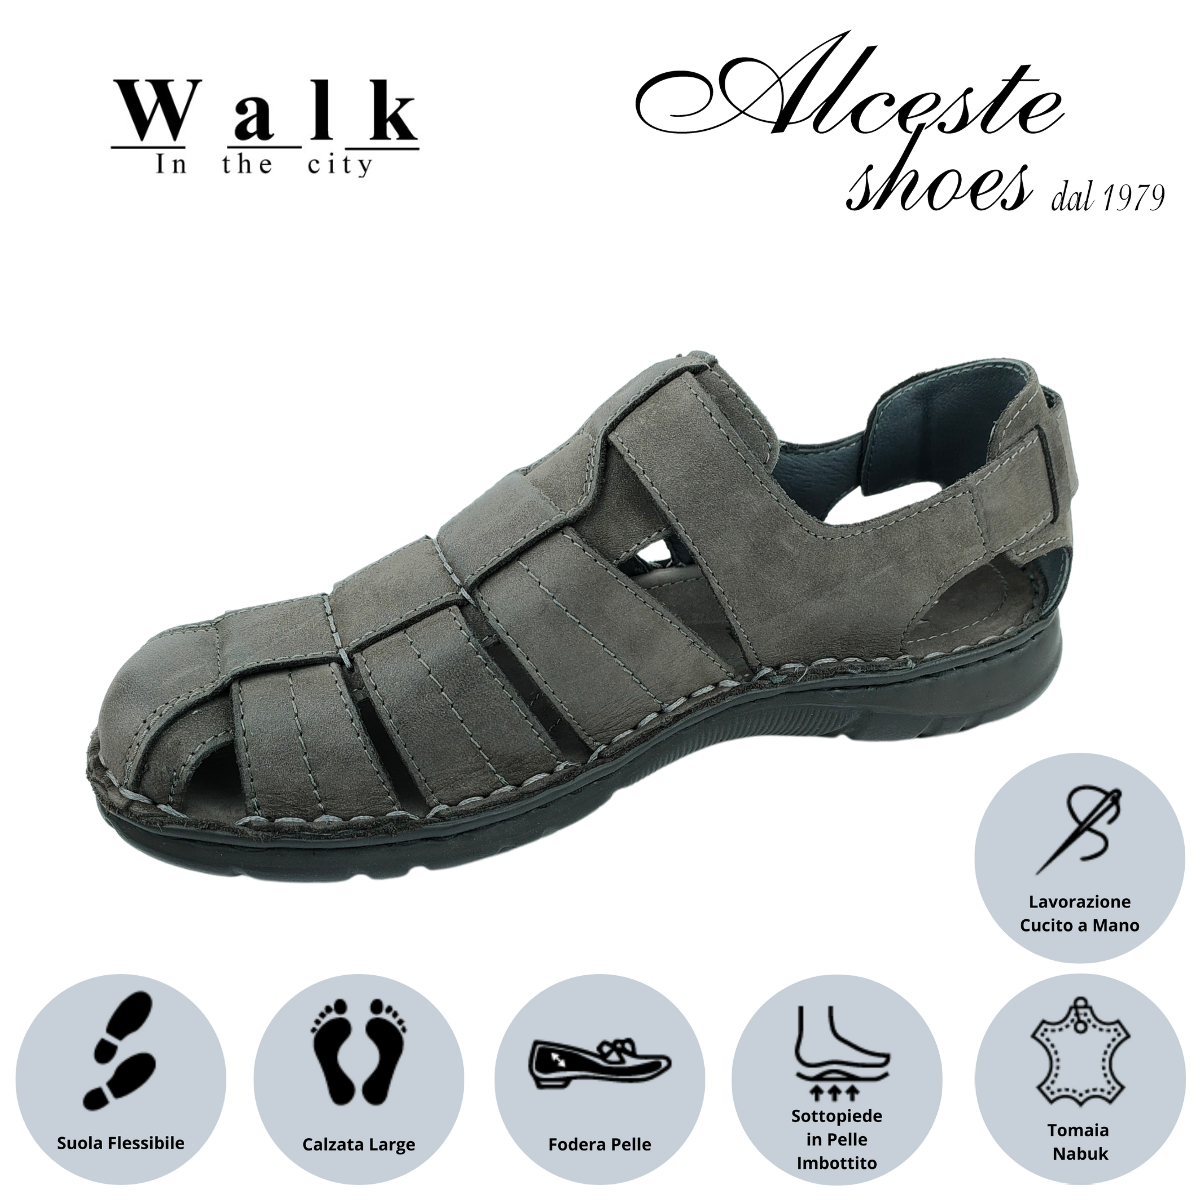 Sandalo Uomo Chiusura con Velcro "Walk in The City" Art. 20910 Nabuk Piombo Alceste Shoes 25